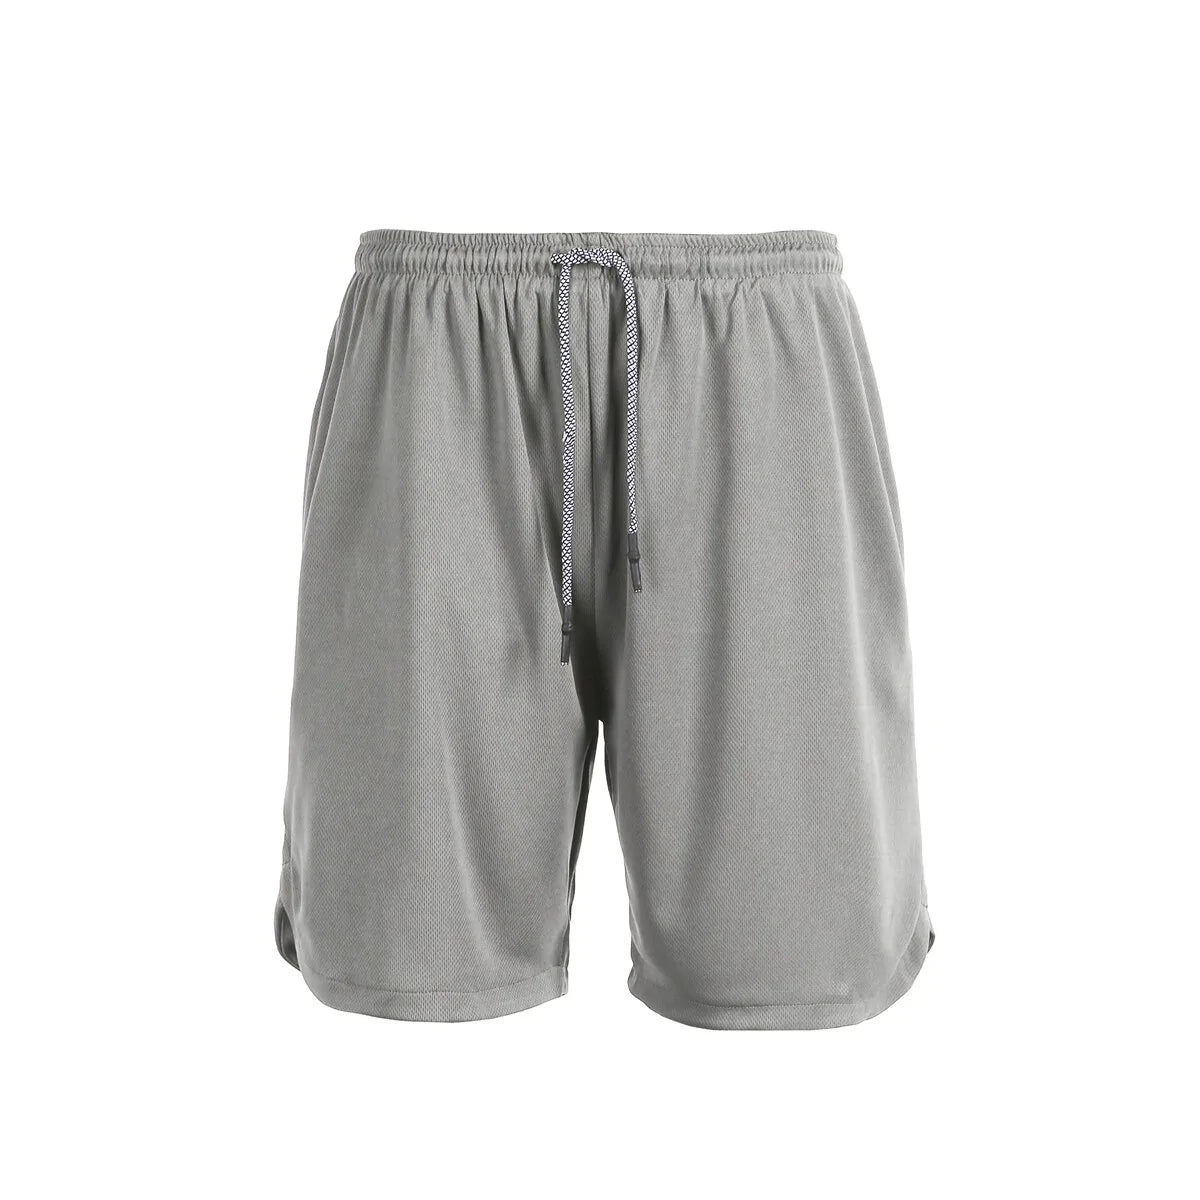 Athletic elastic shorts satsunsport 